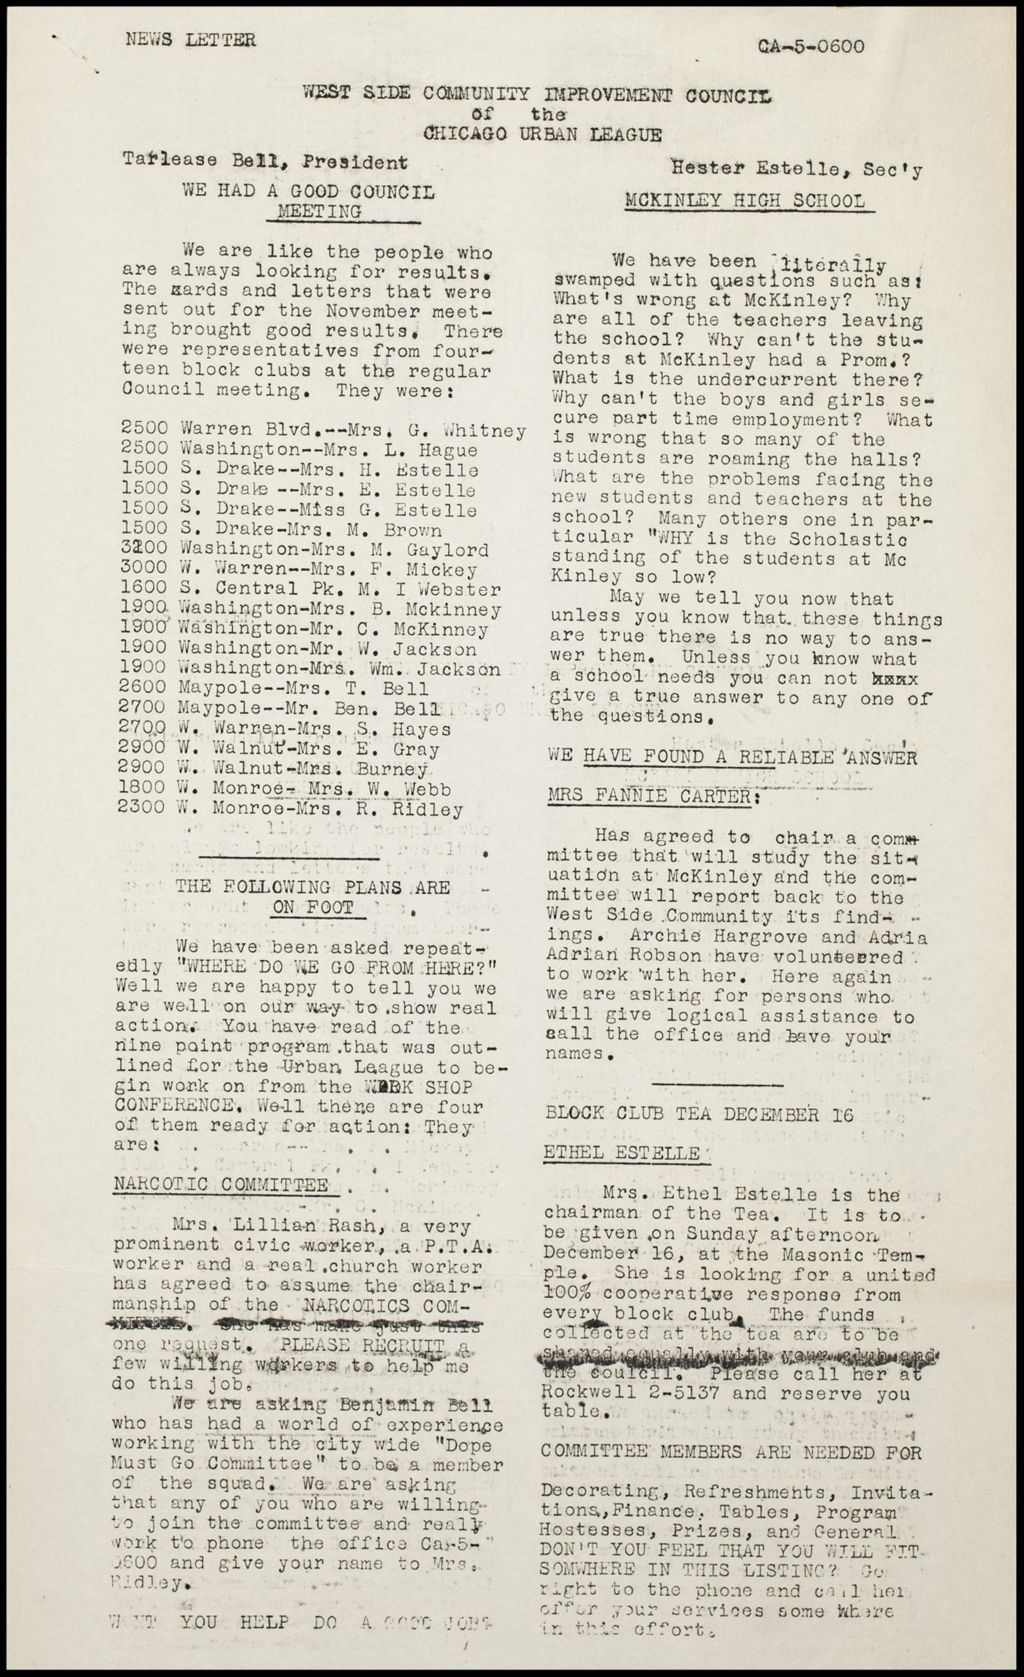 Miniature of Westside Community Council newsletters, undated (Folder I-2734)